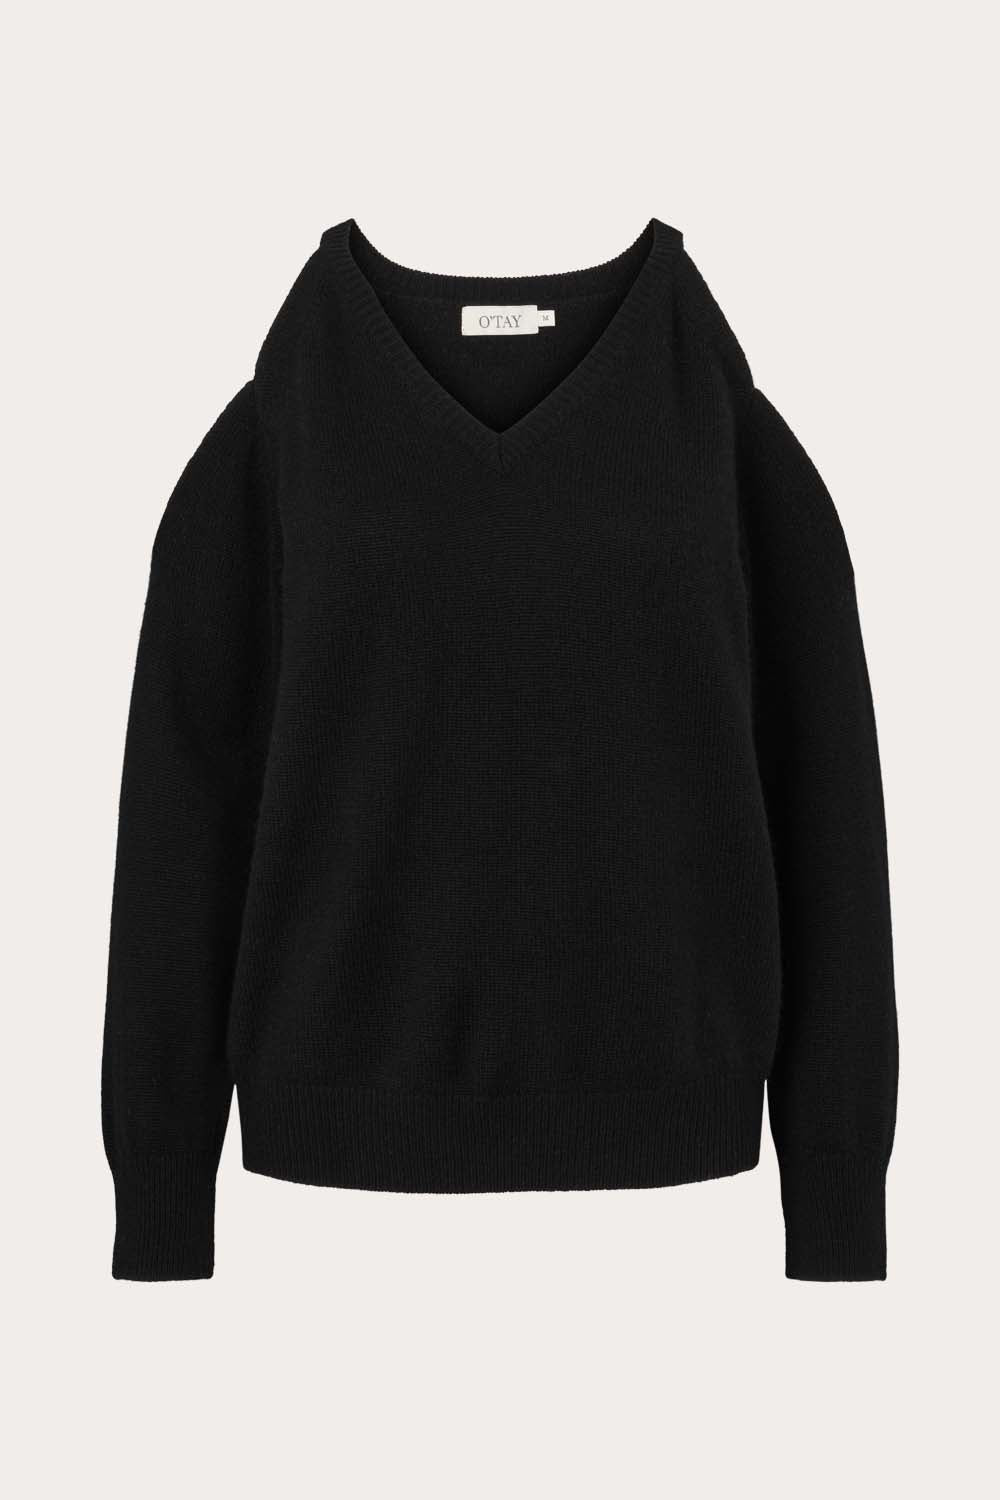 O&#39;TAY Davina Sweater Bluser Black